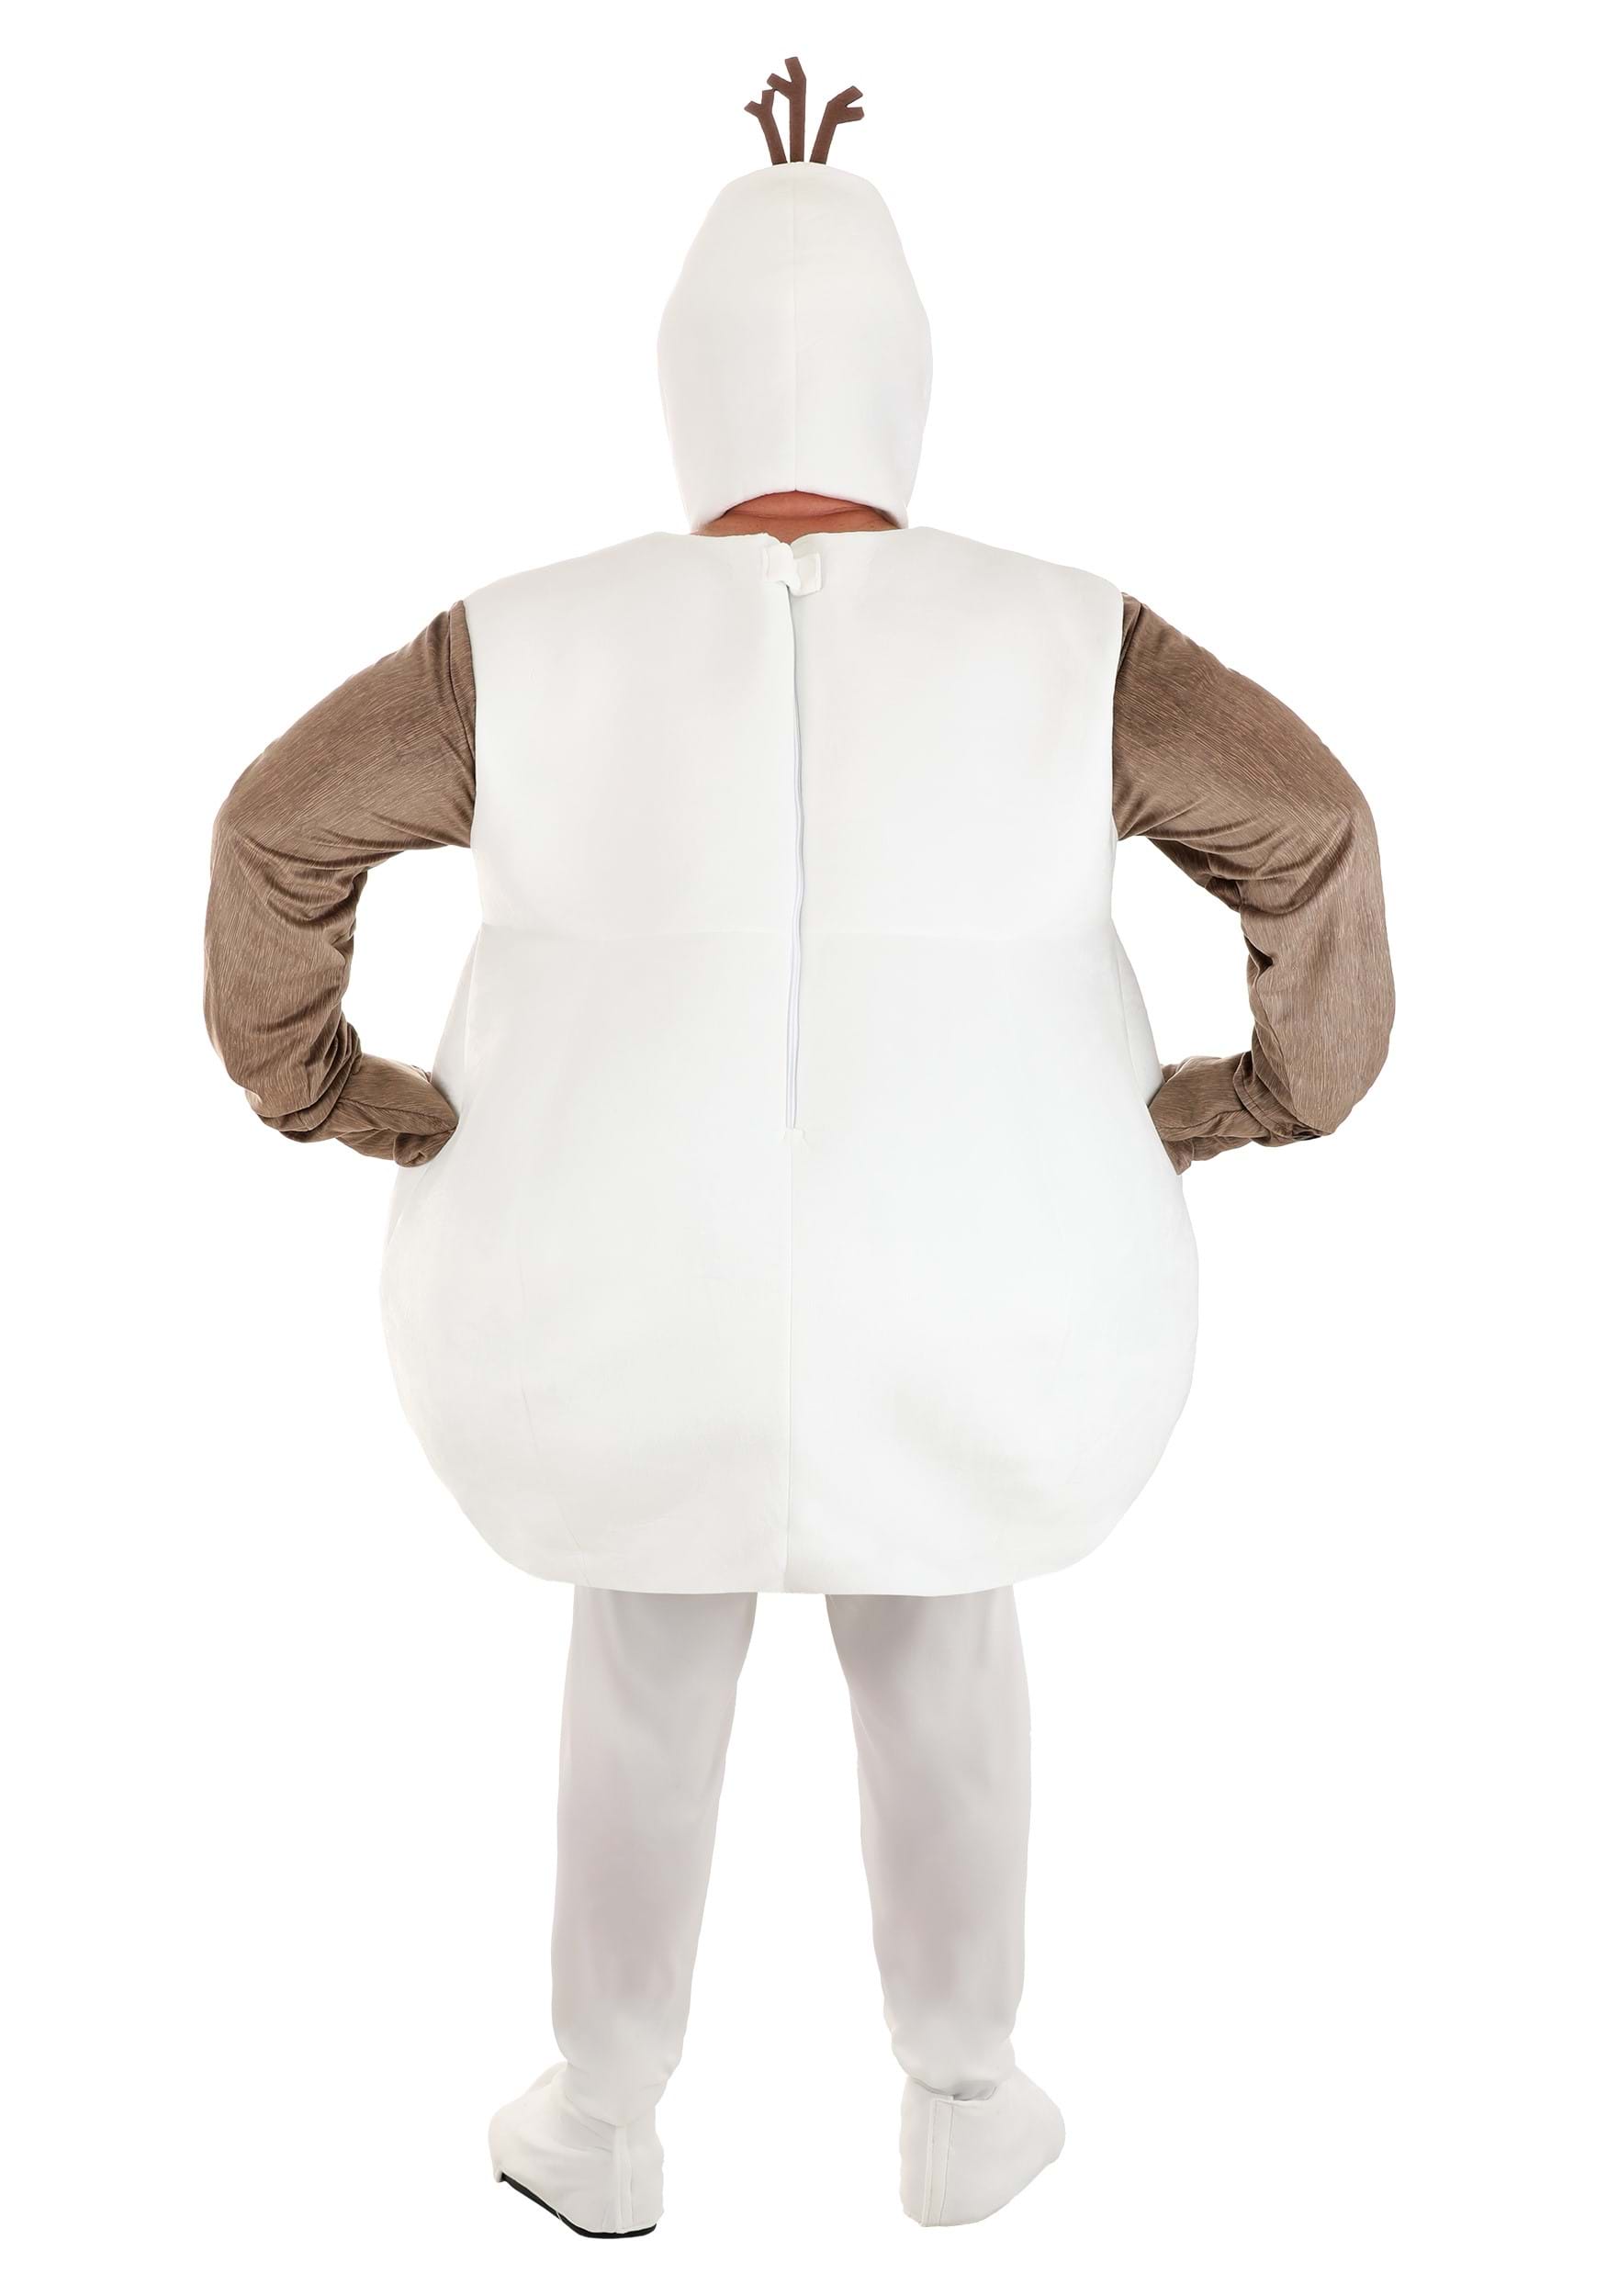 Plus Size Adult Olaf Frozen Costume